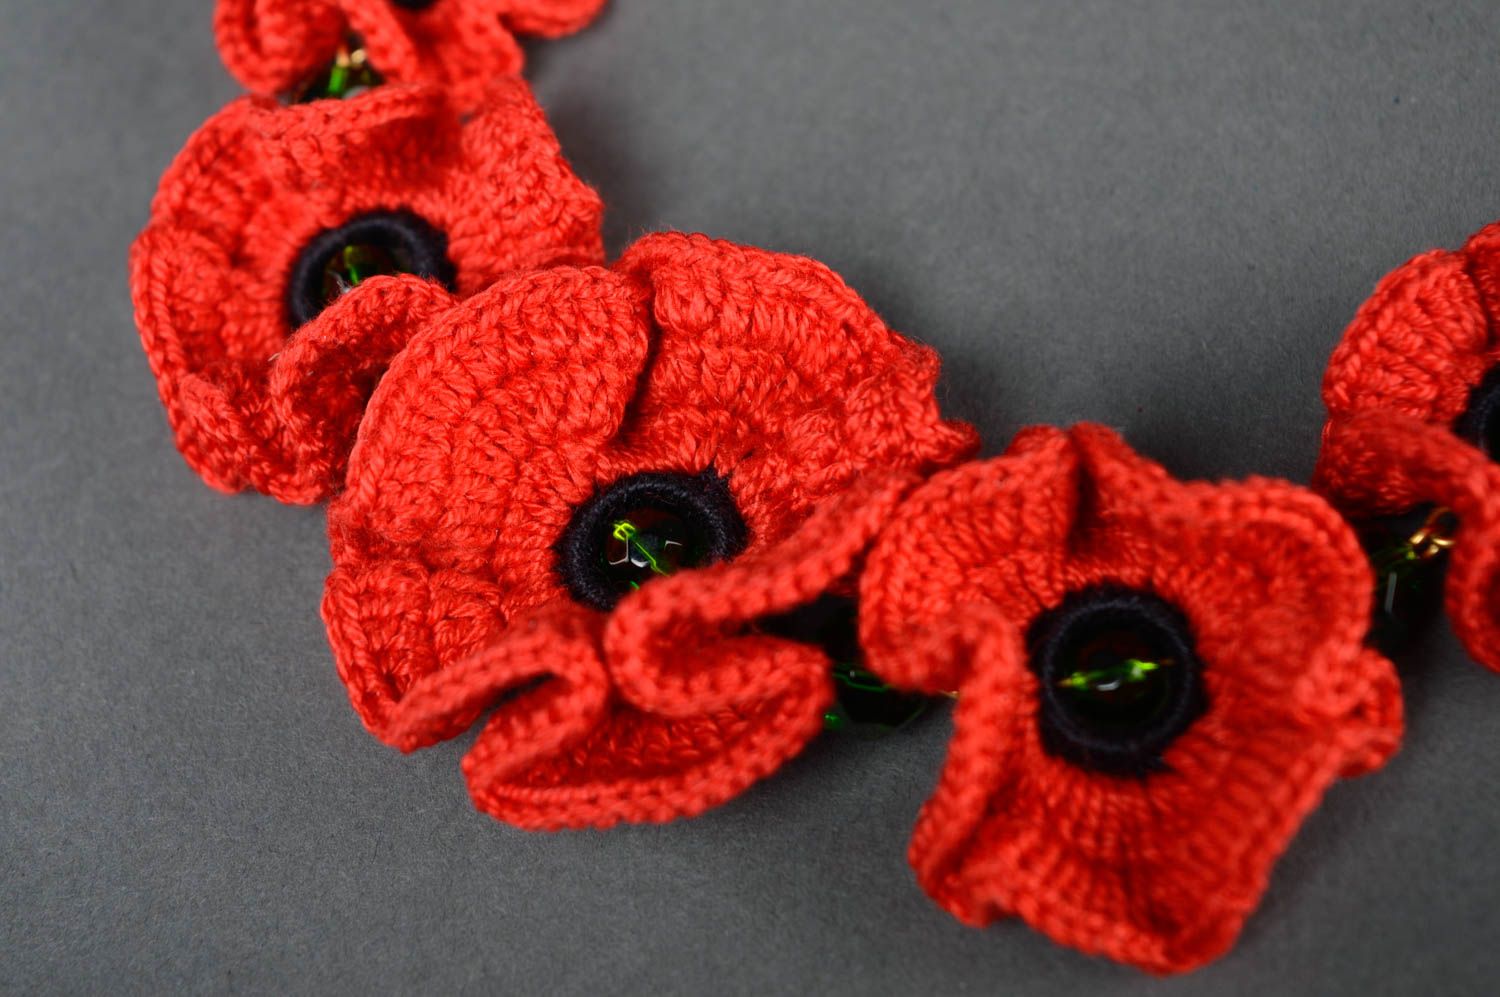 Bright crochet bracelet with red poppy flowers photo 2